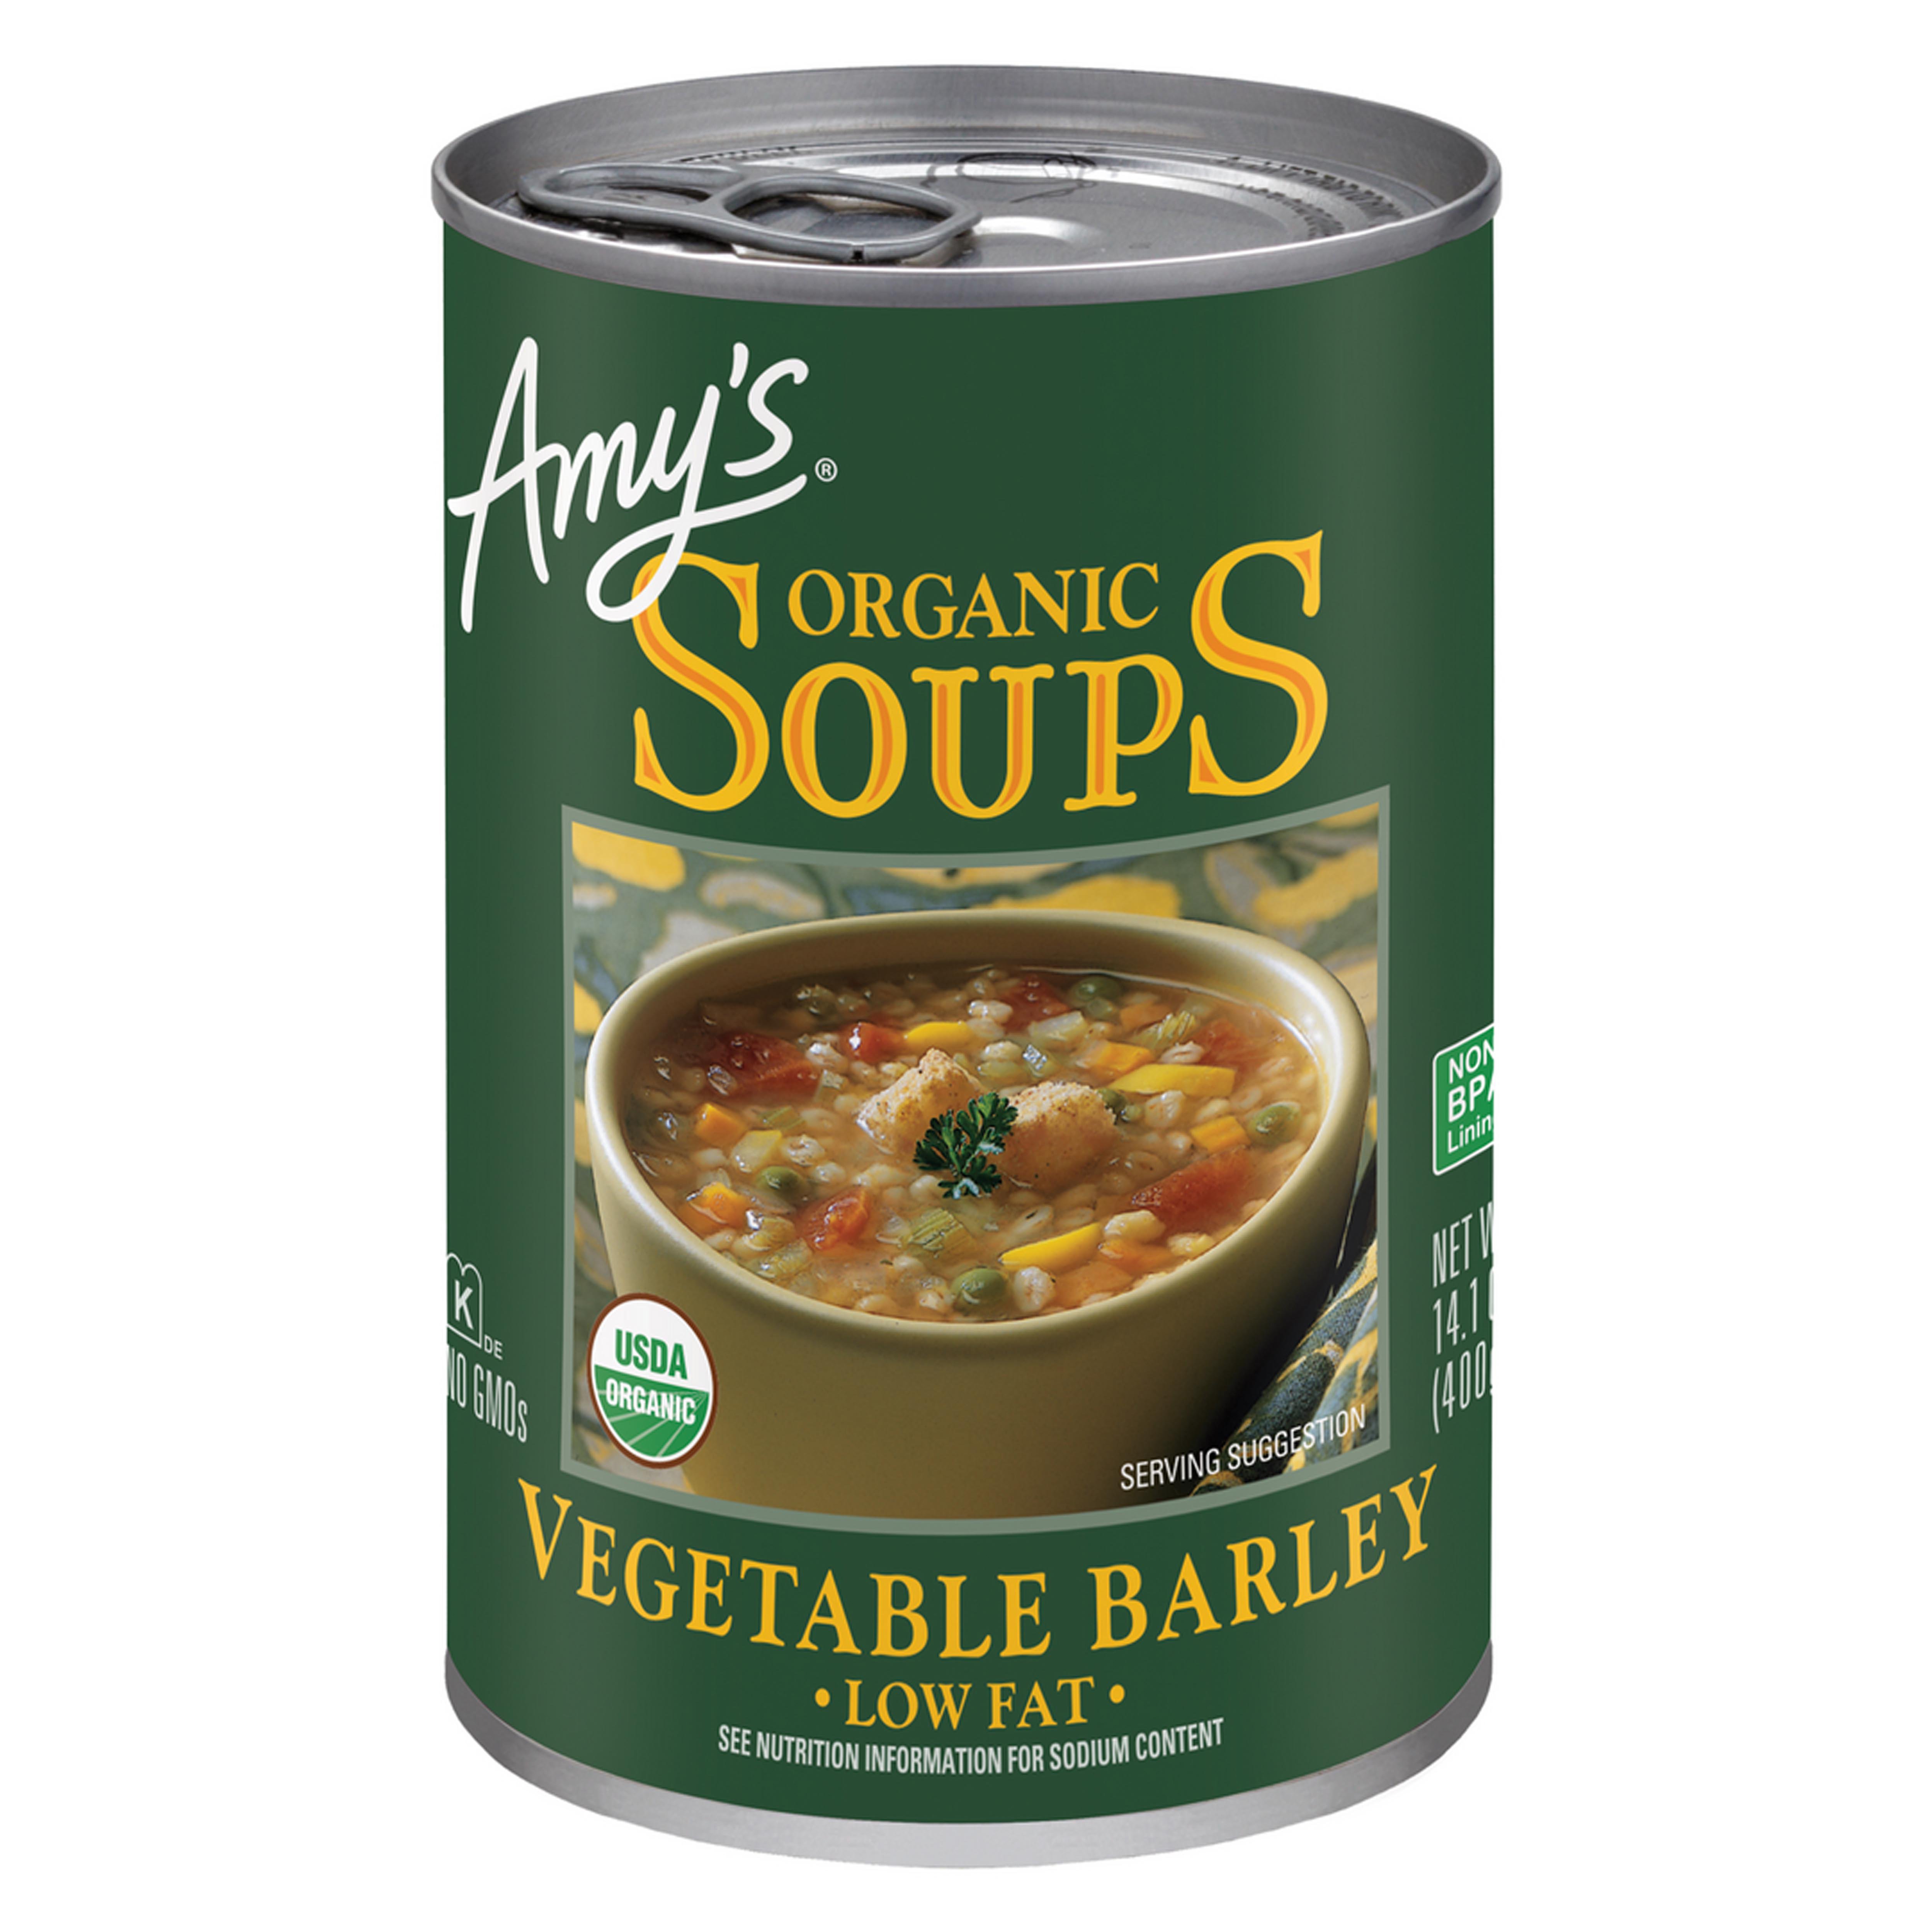 Vegetable Barley Soup - Alison's Allspice